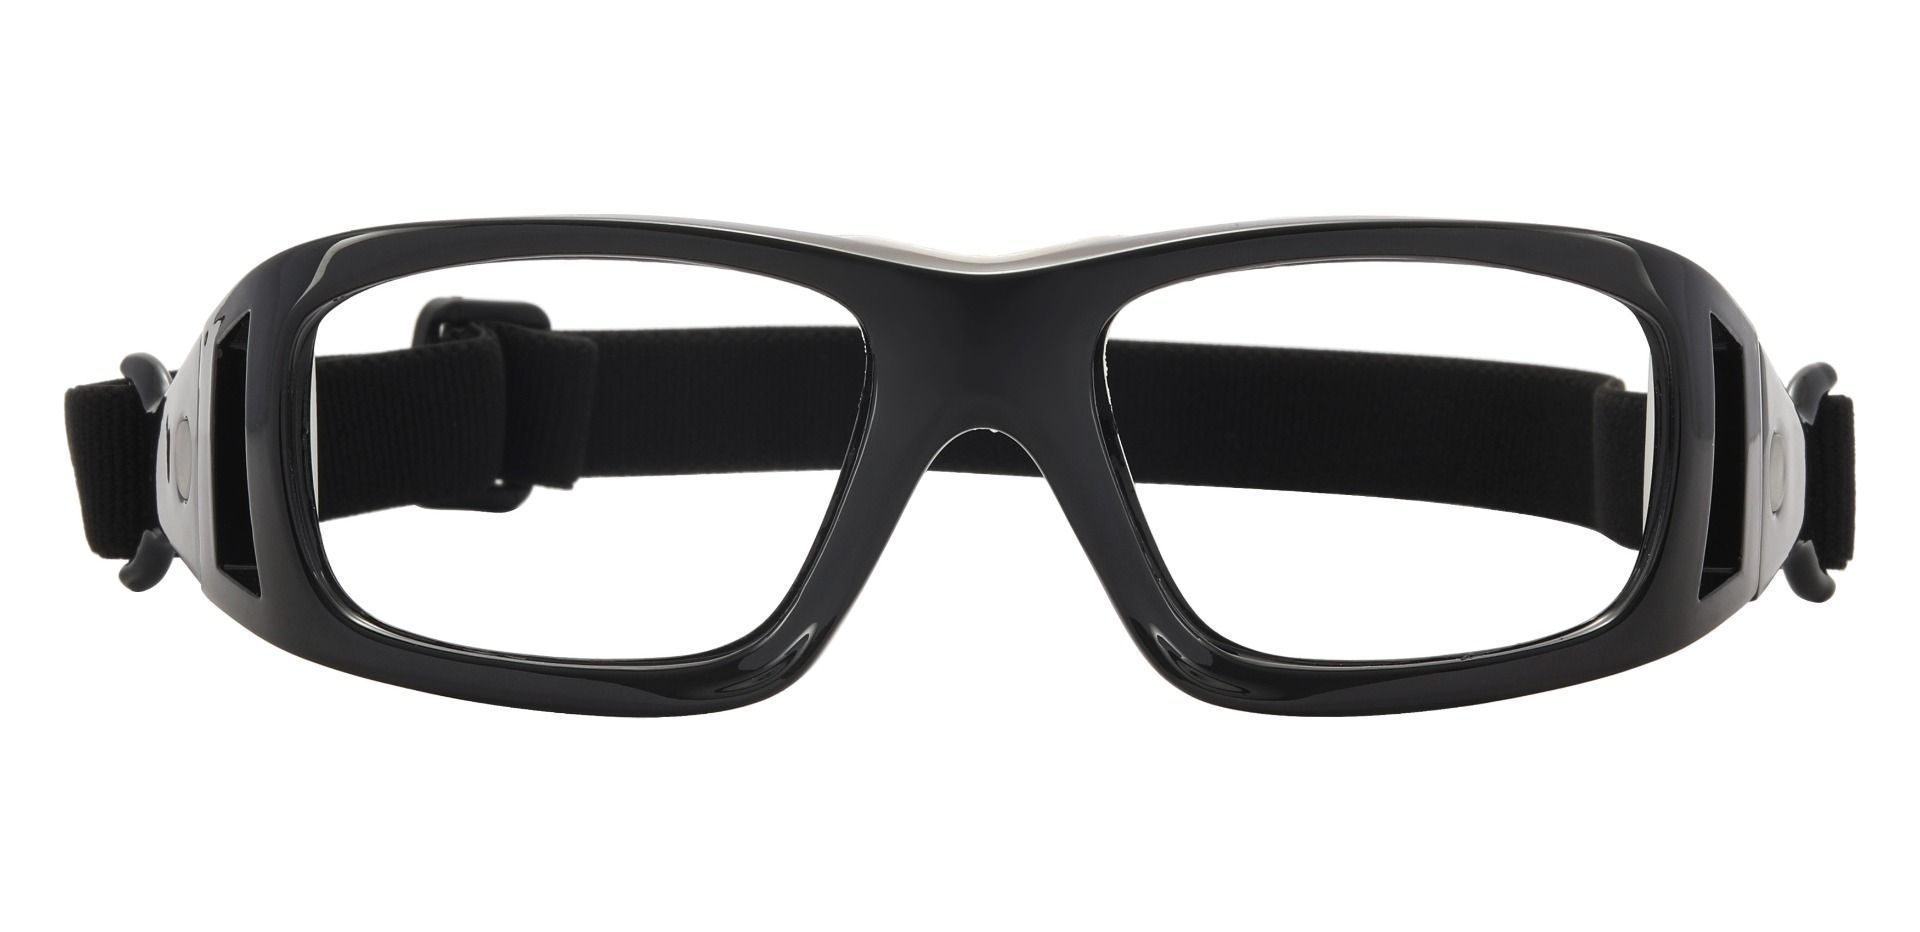 Heller Sports Goggles Prescription Glasses - Black